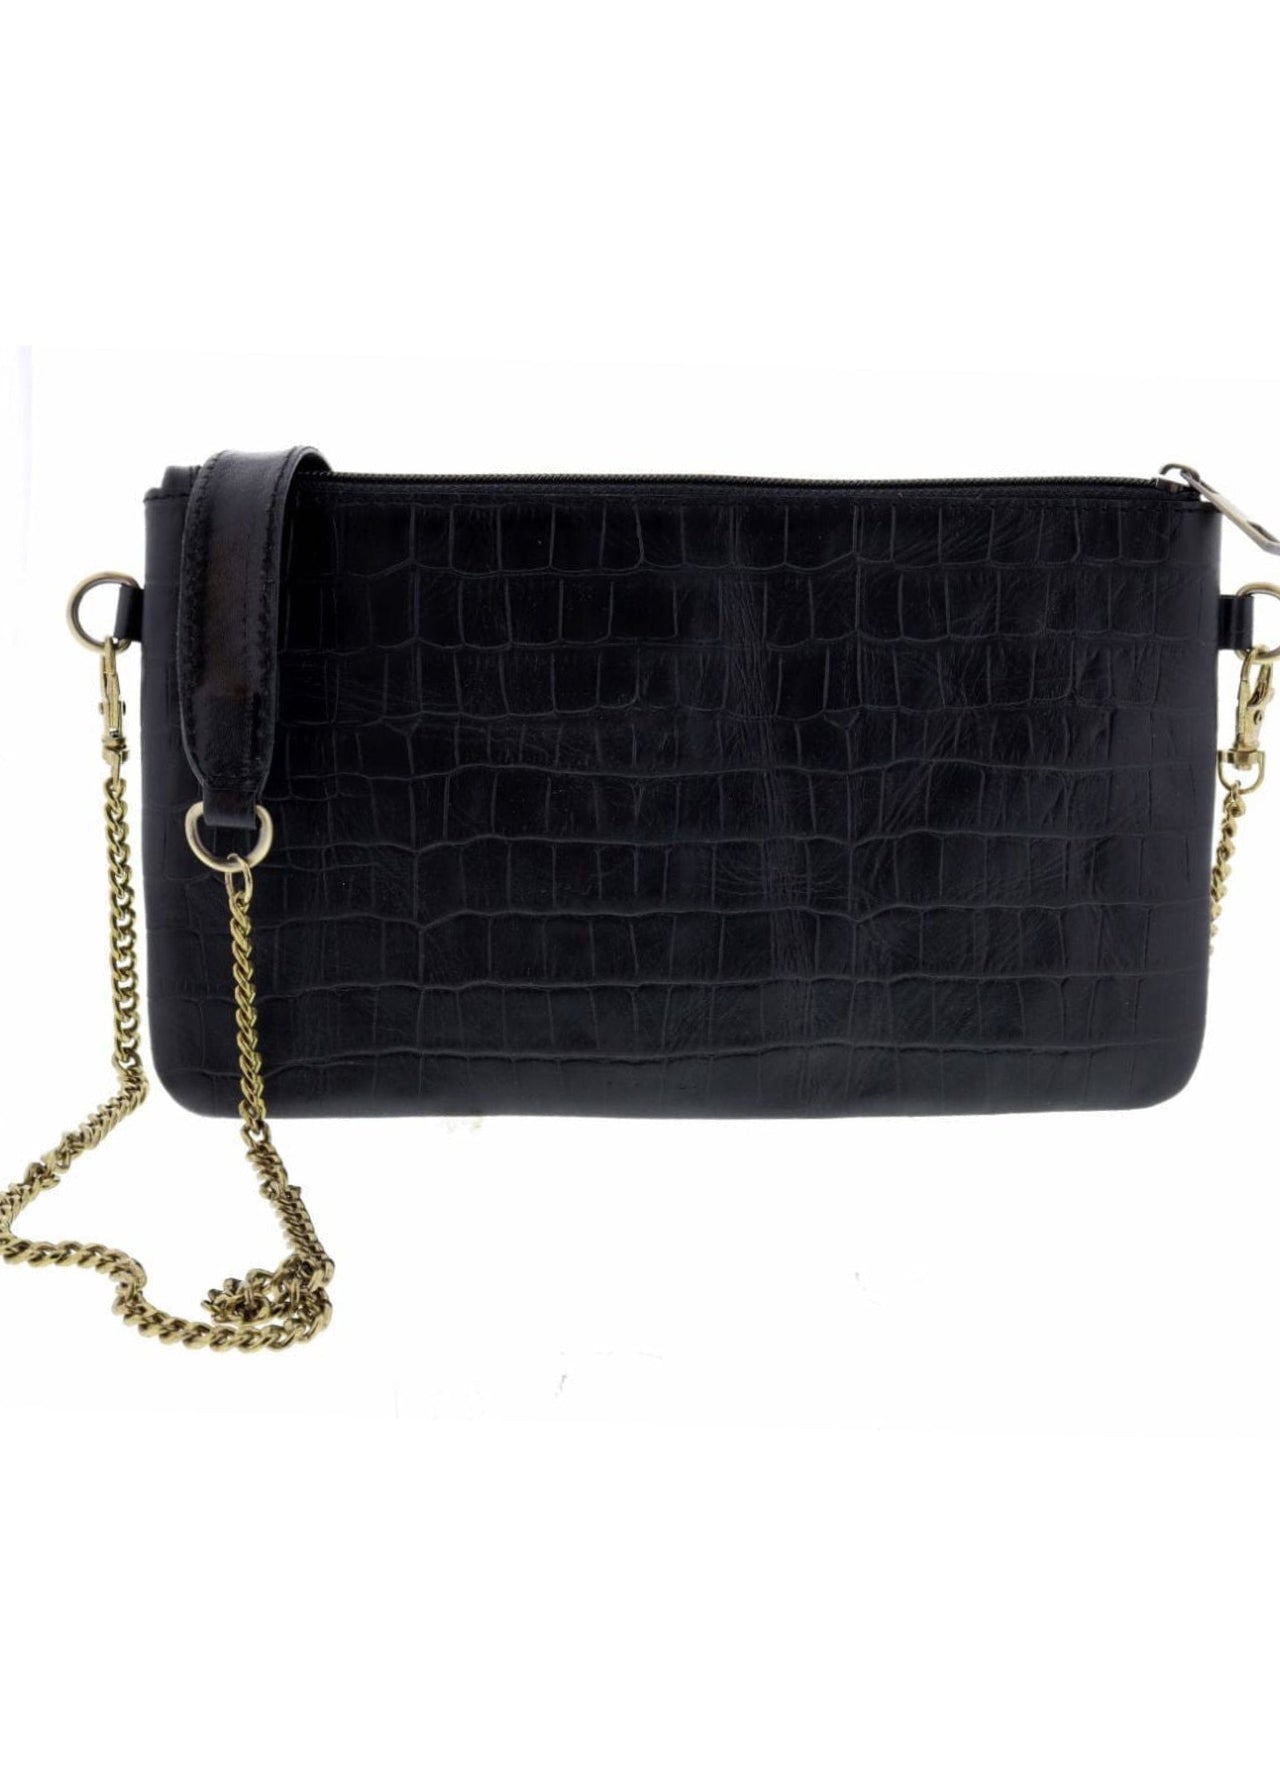 Alligator Embossed Leather Clutch | 2 Styles JaneMarie Handbags, Wallets & Cases Crossbody